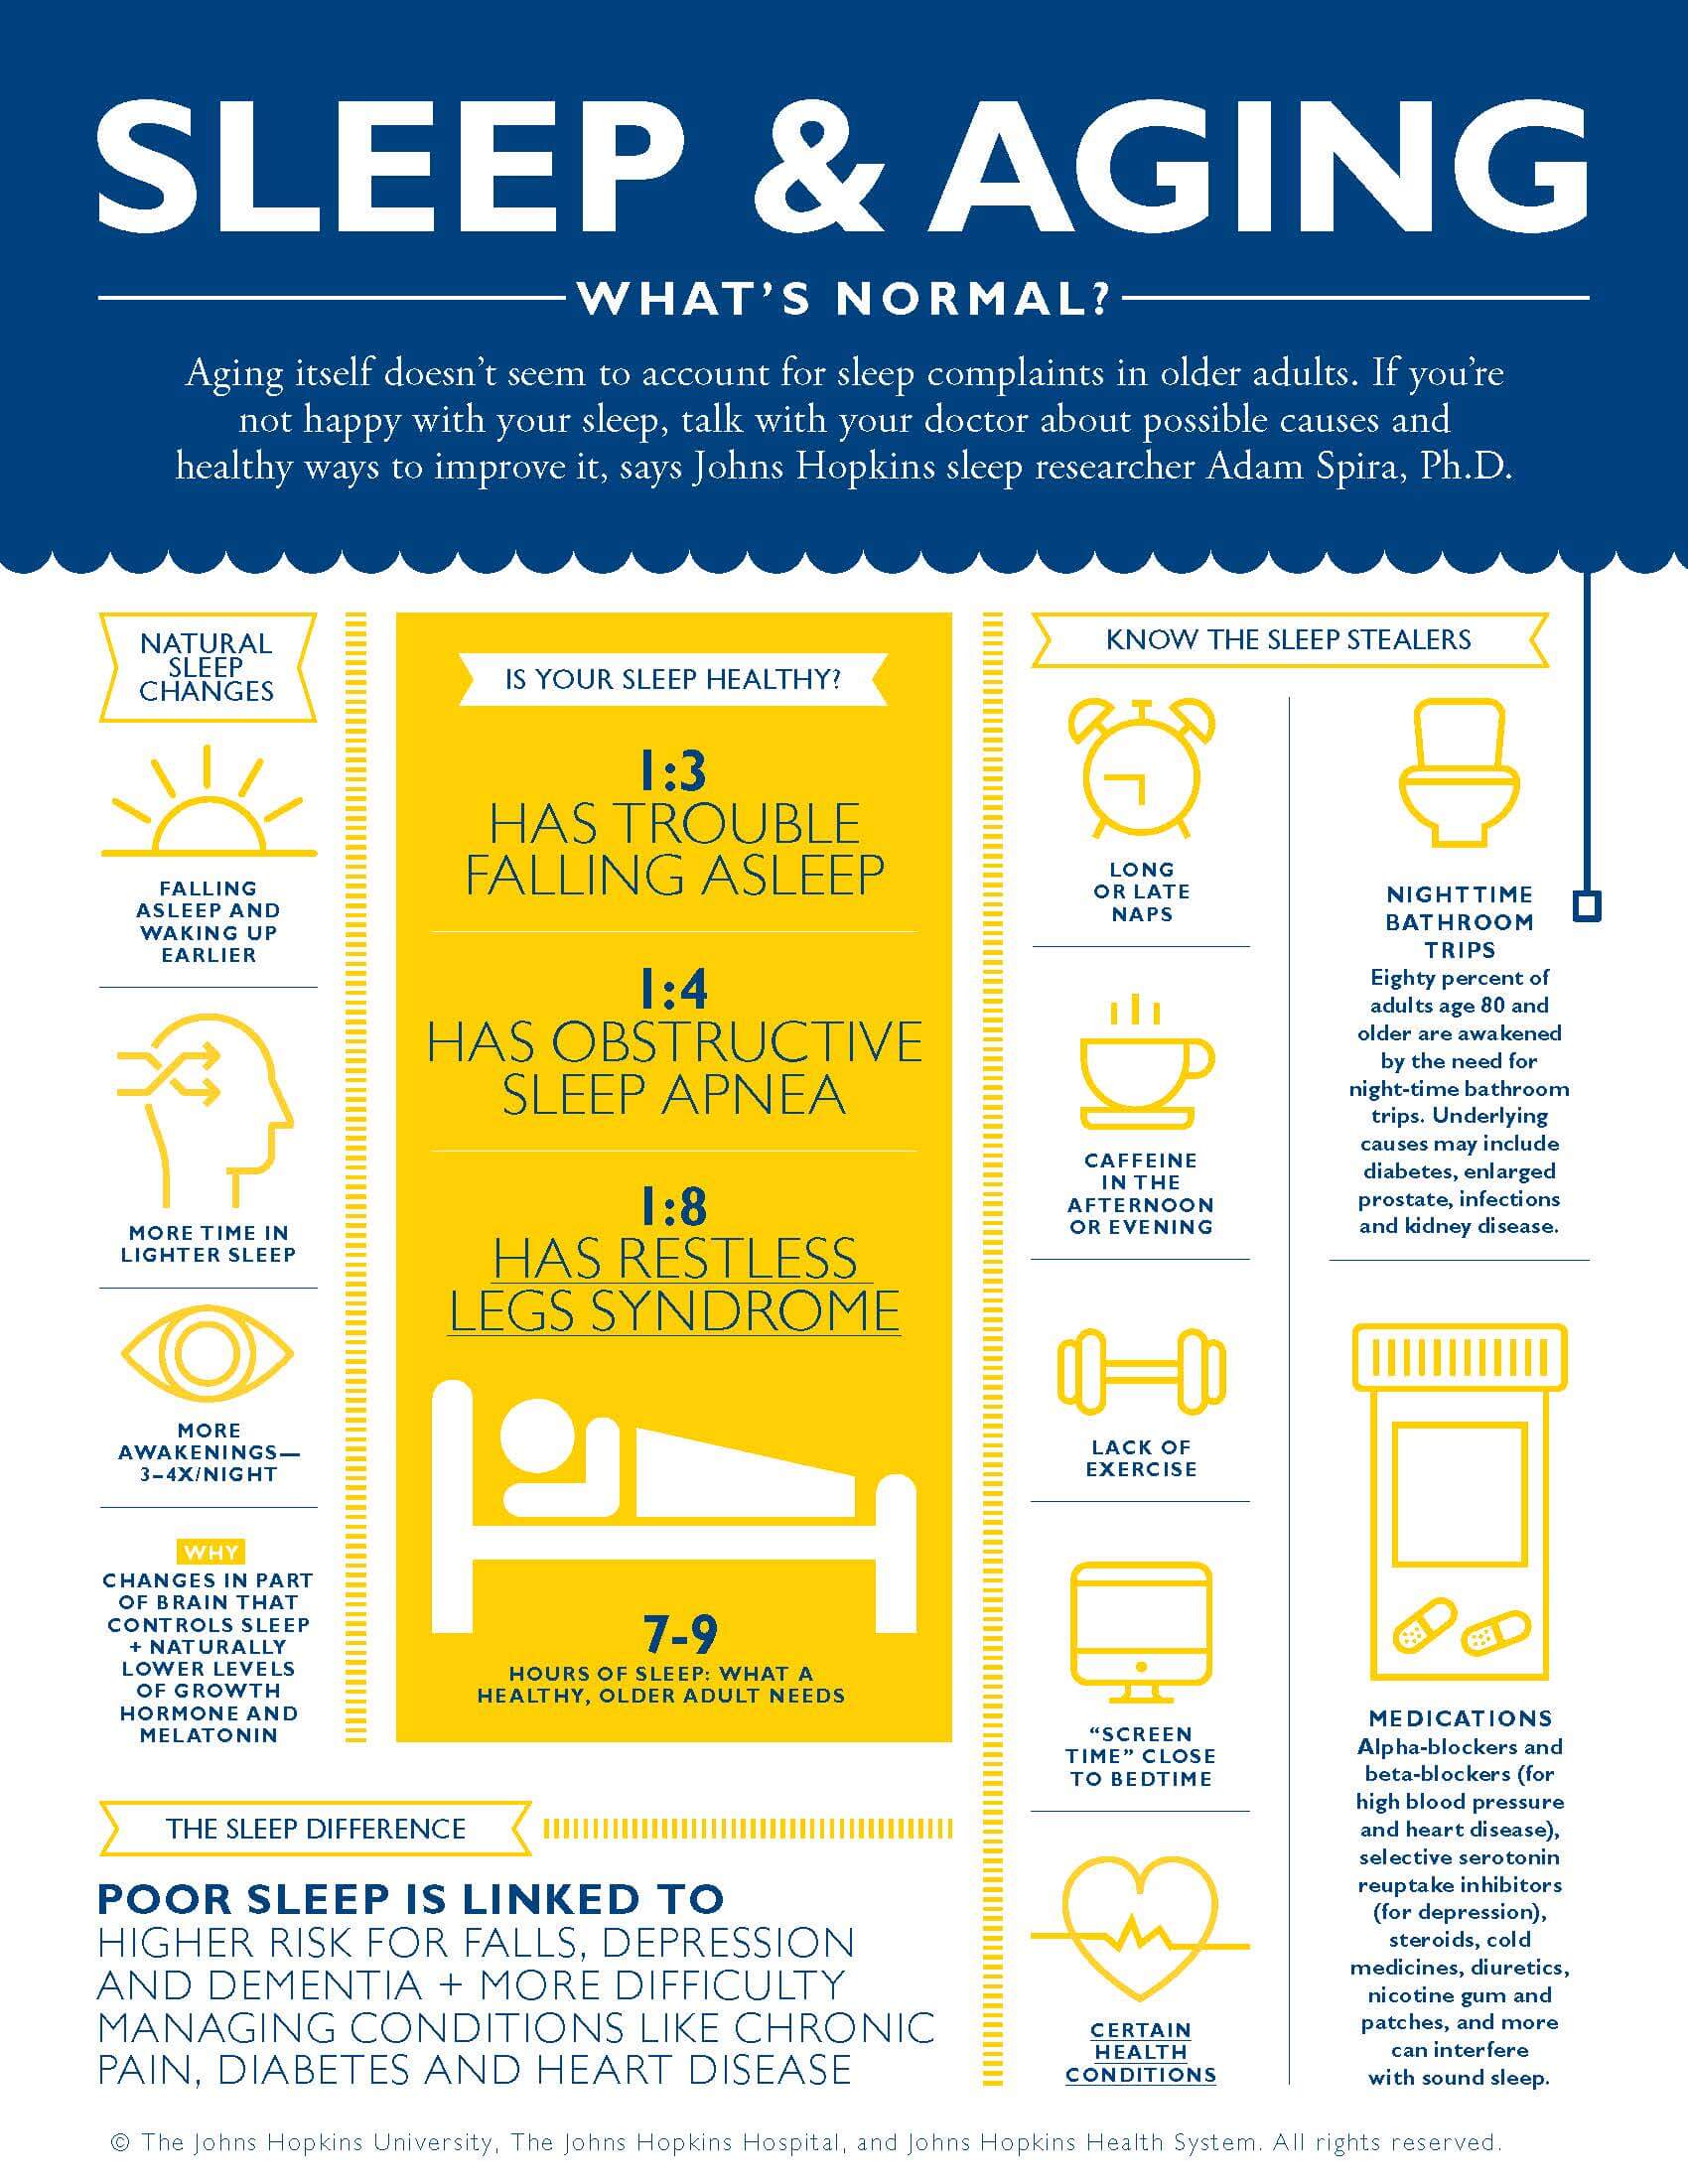 Sleep and aging infographic